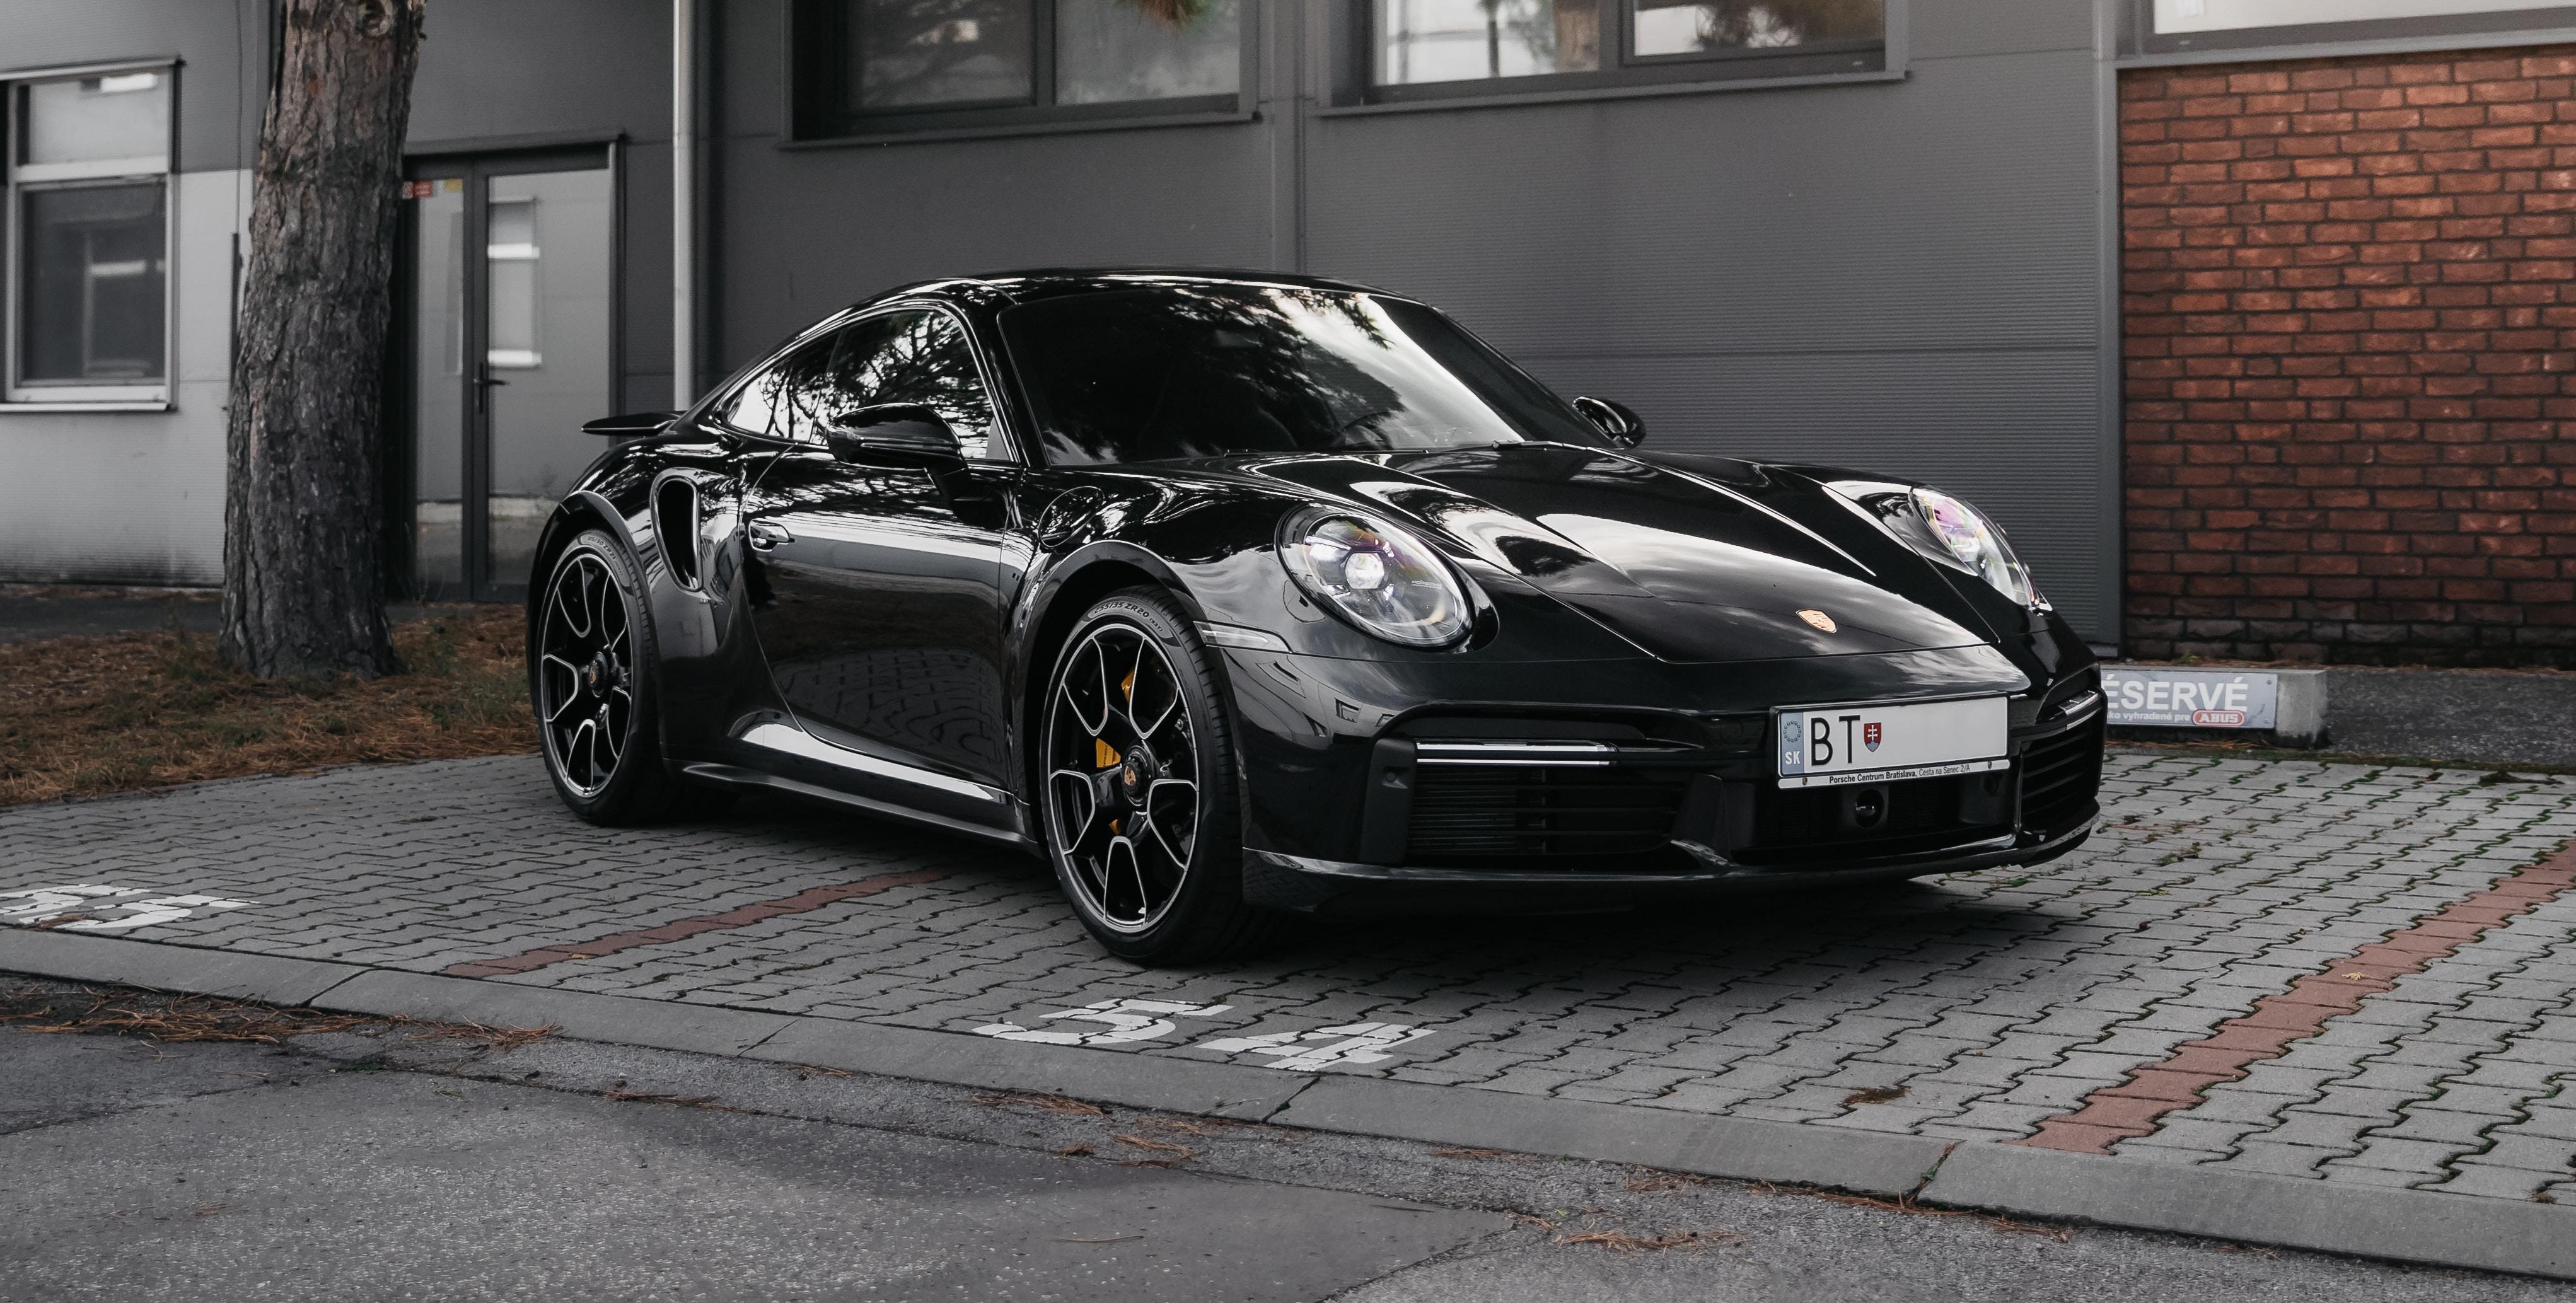 Egy fekete Porsche 911-es